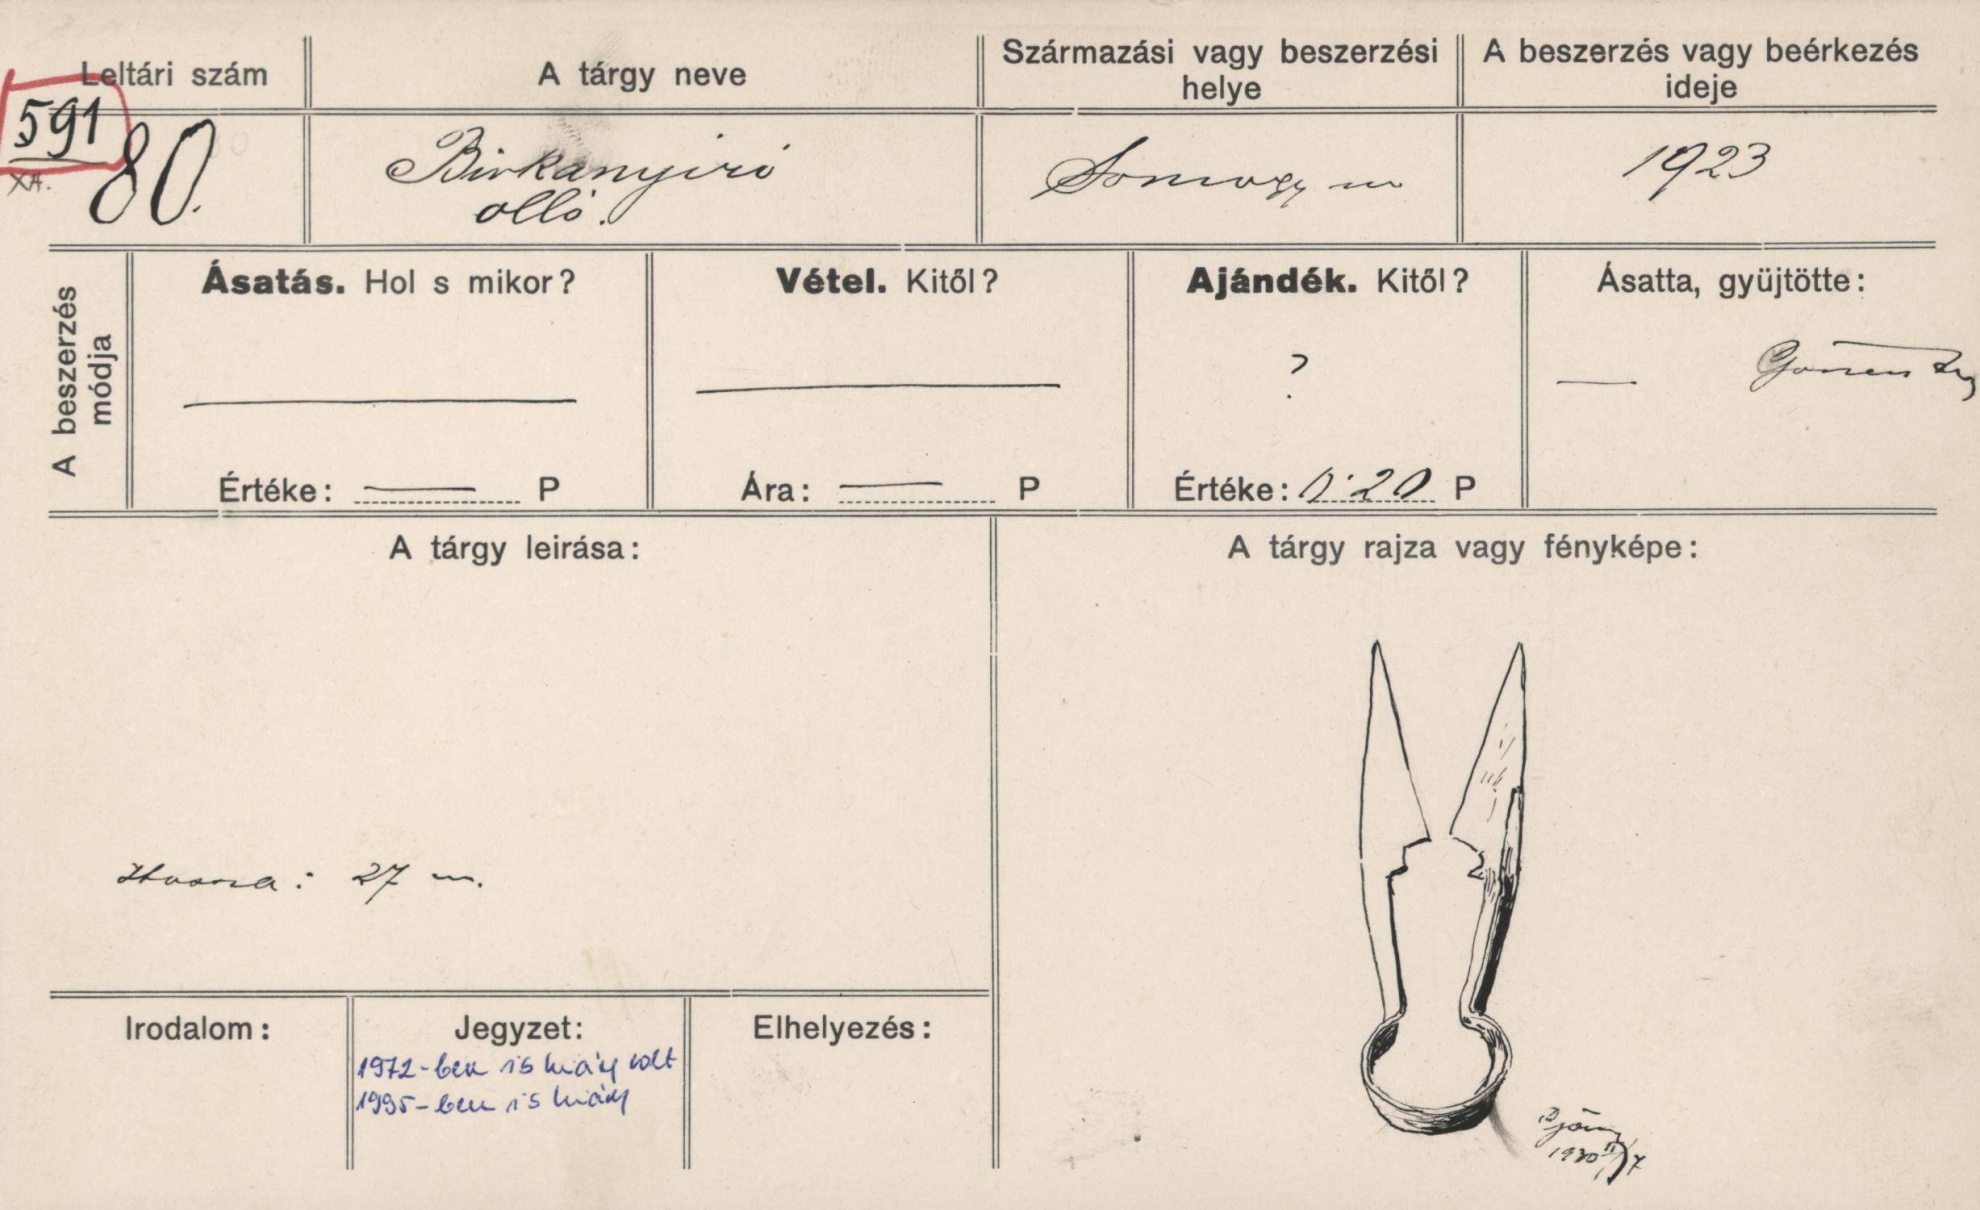 Birkanyírő olló (Rippl-Rónai Múzeum CC BY-NC-SA)